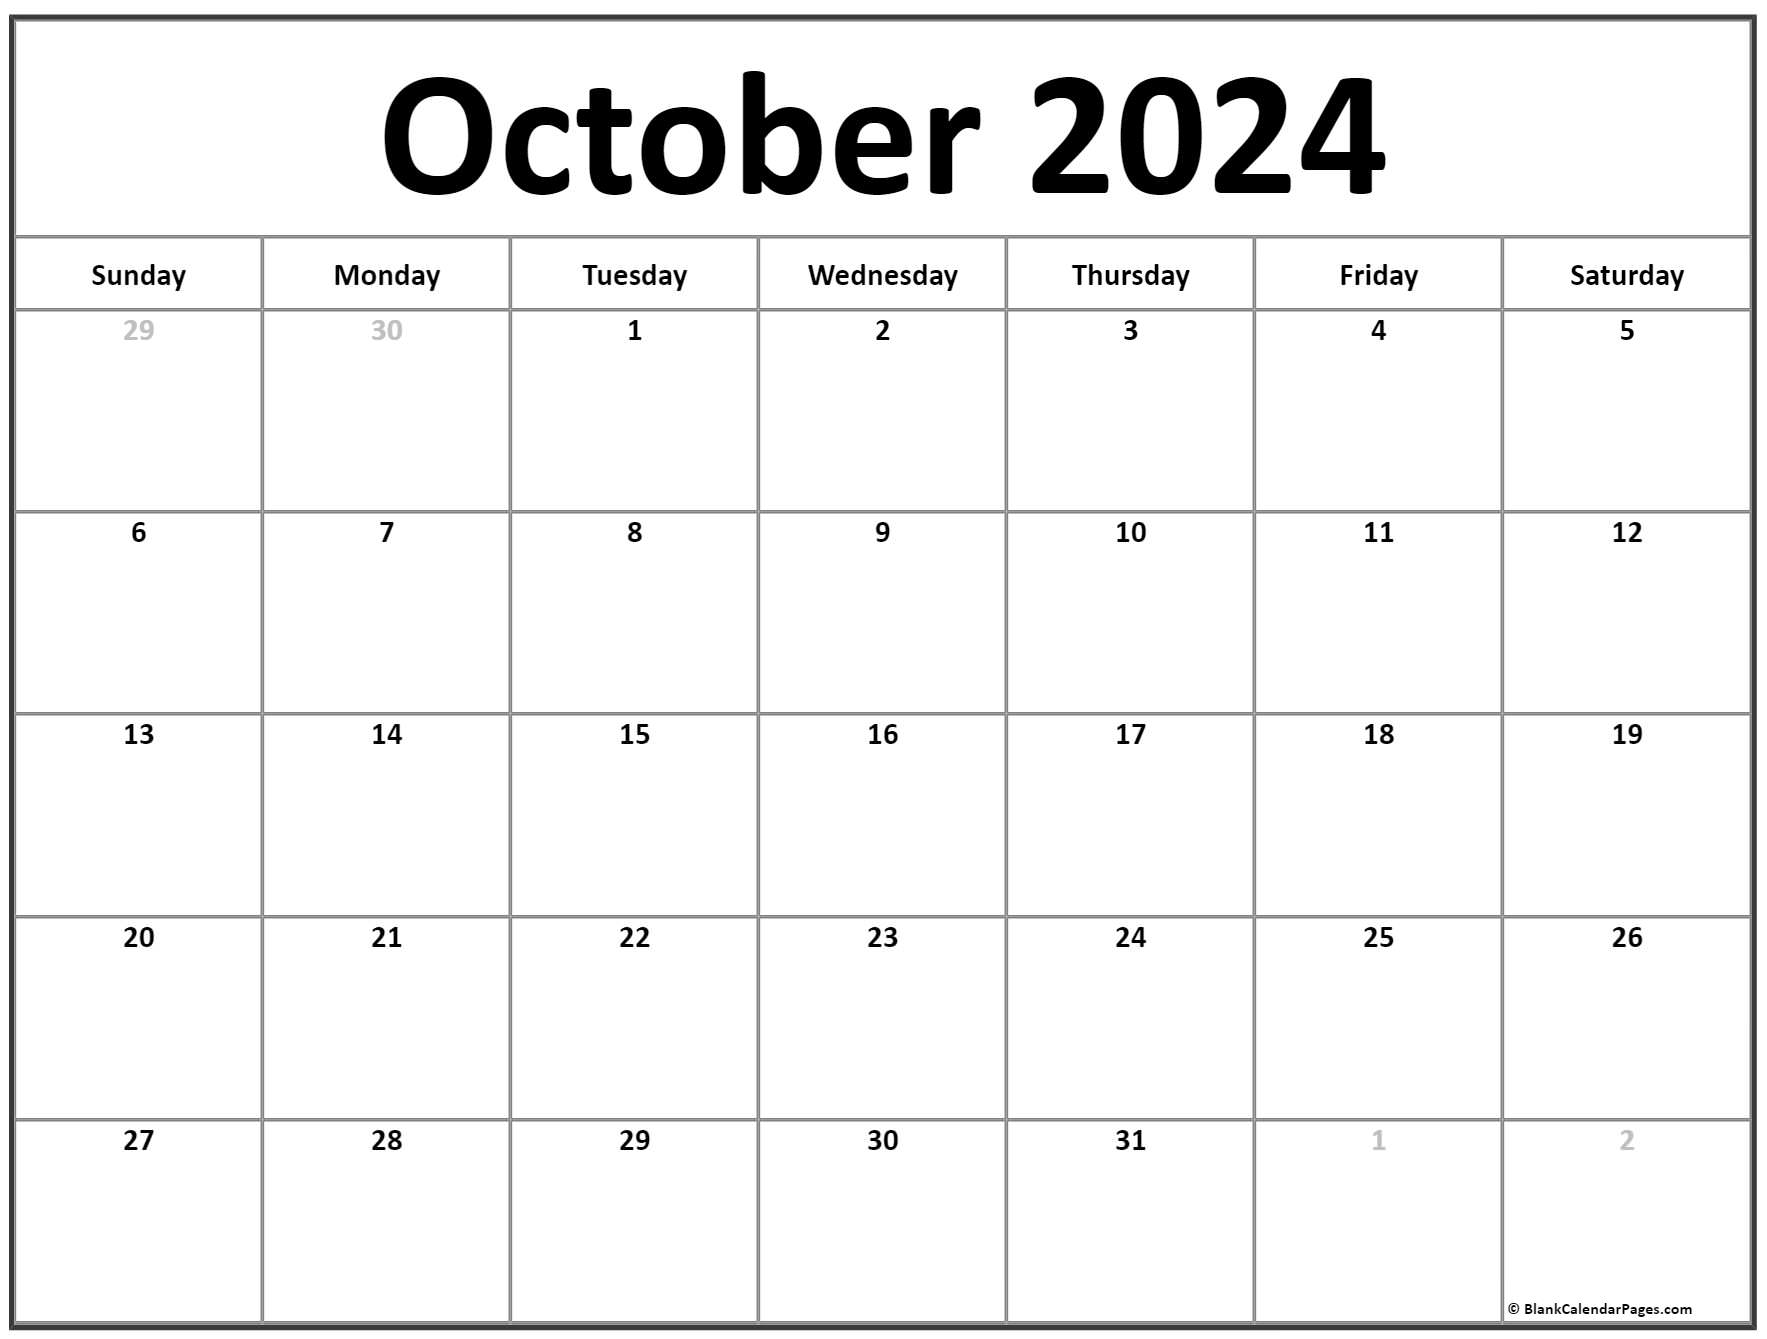 October 2021 calendar | 56+ templates of 2021 printable ...